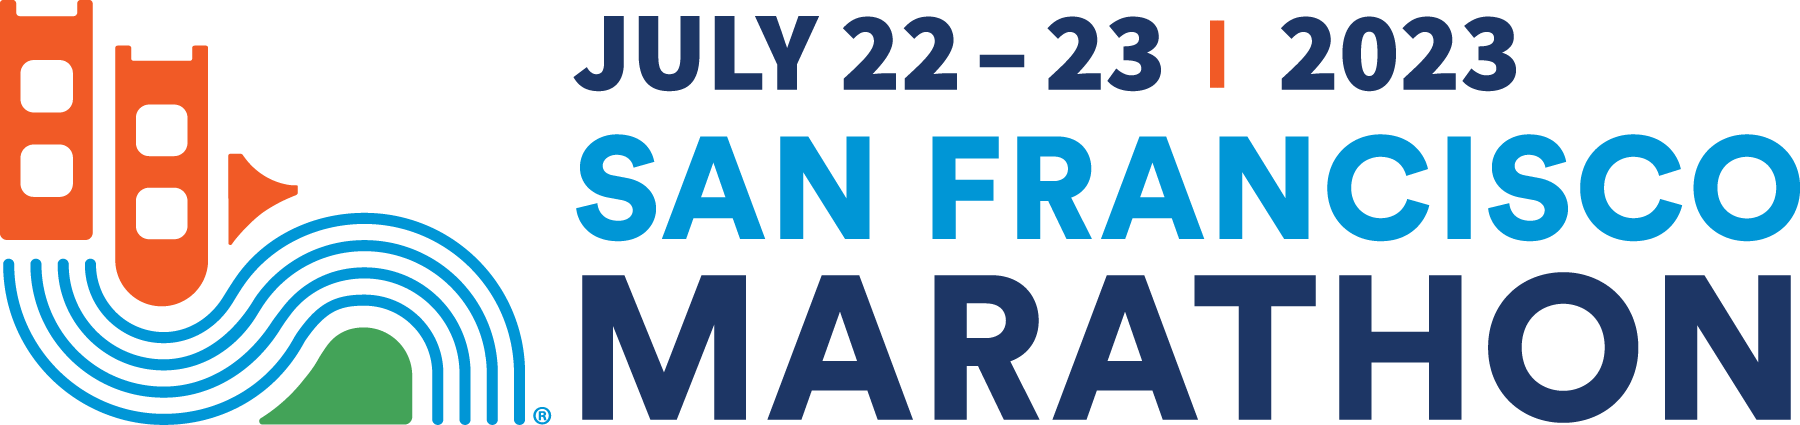 2023 san francisco marathon